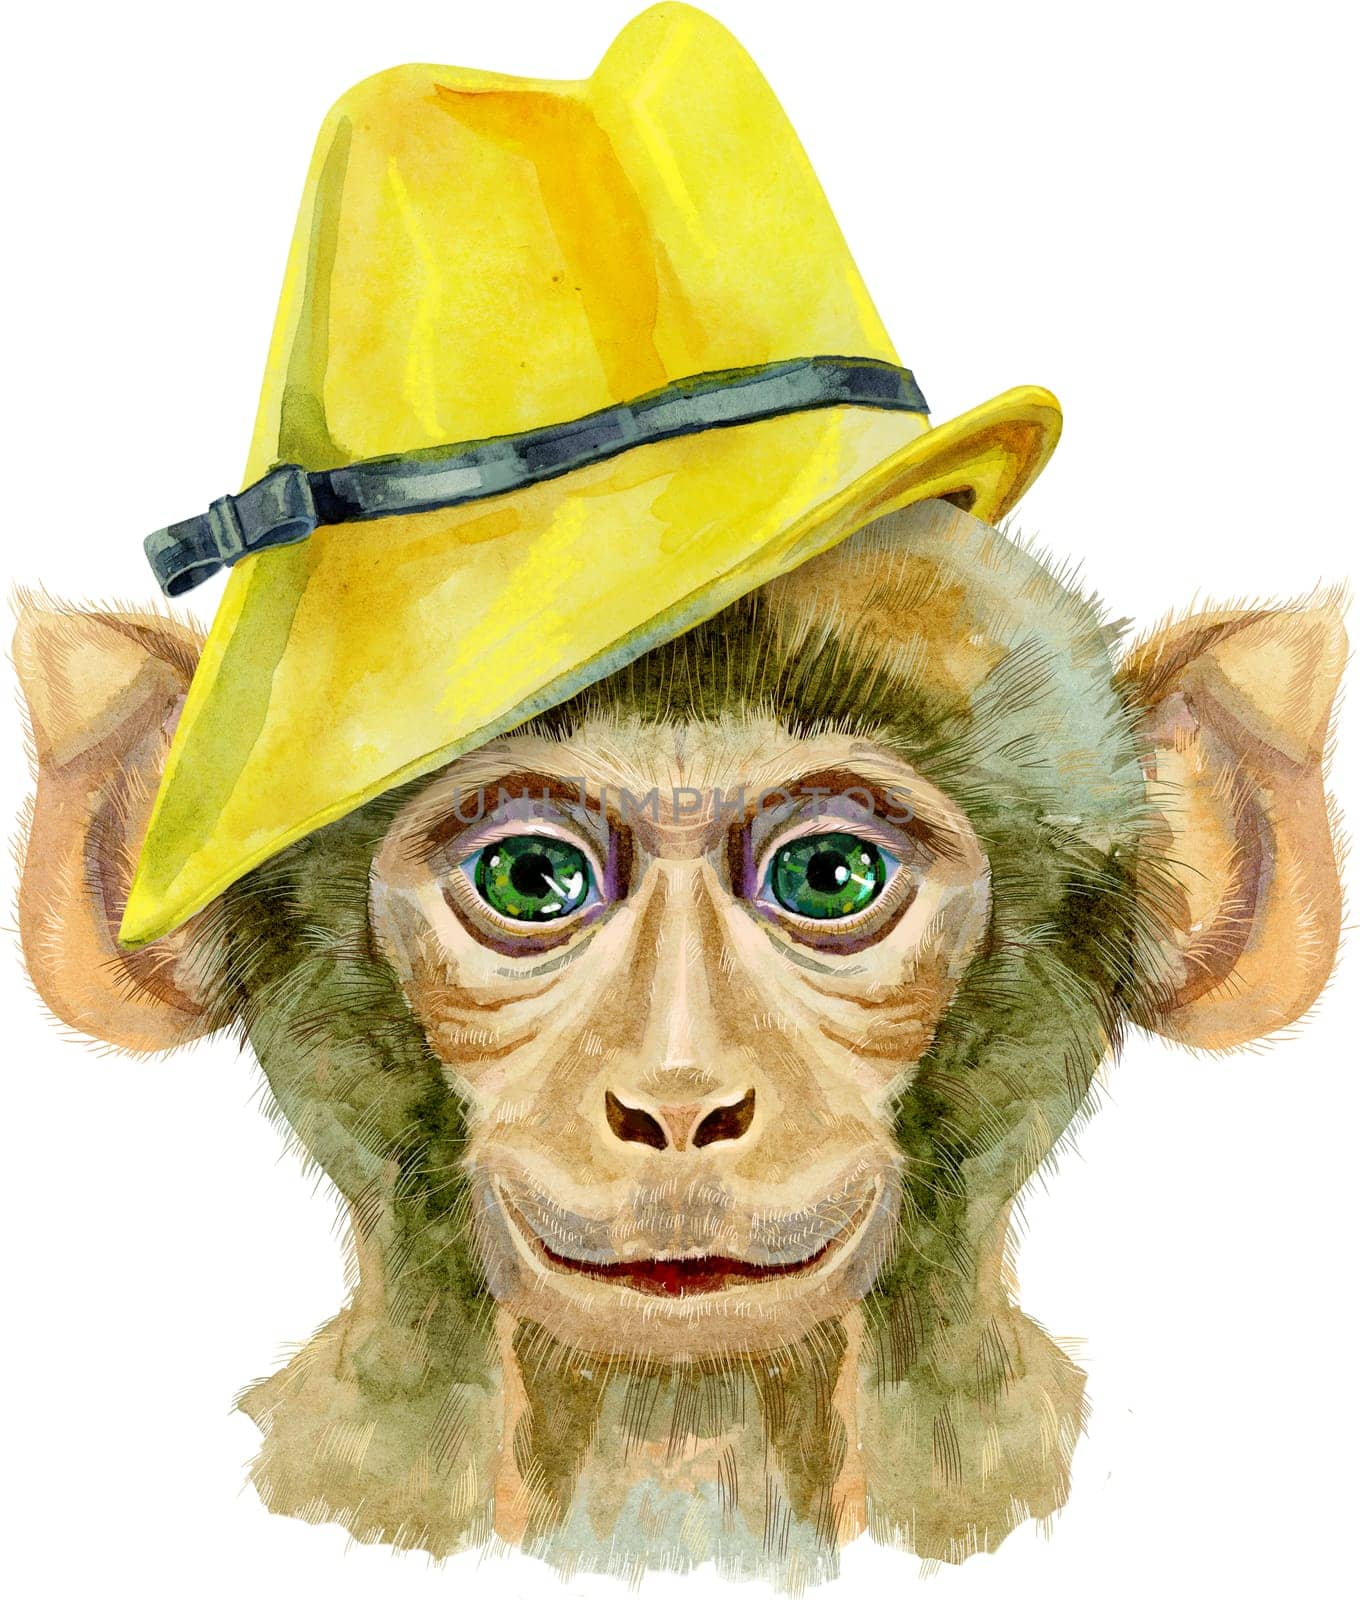 Monkey head yellow hat isolated on white background. Monkey watercolor illustration